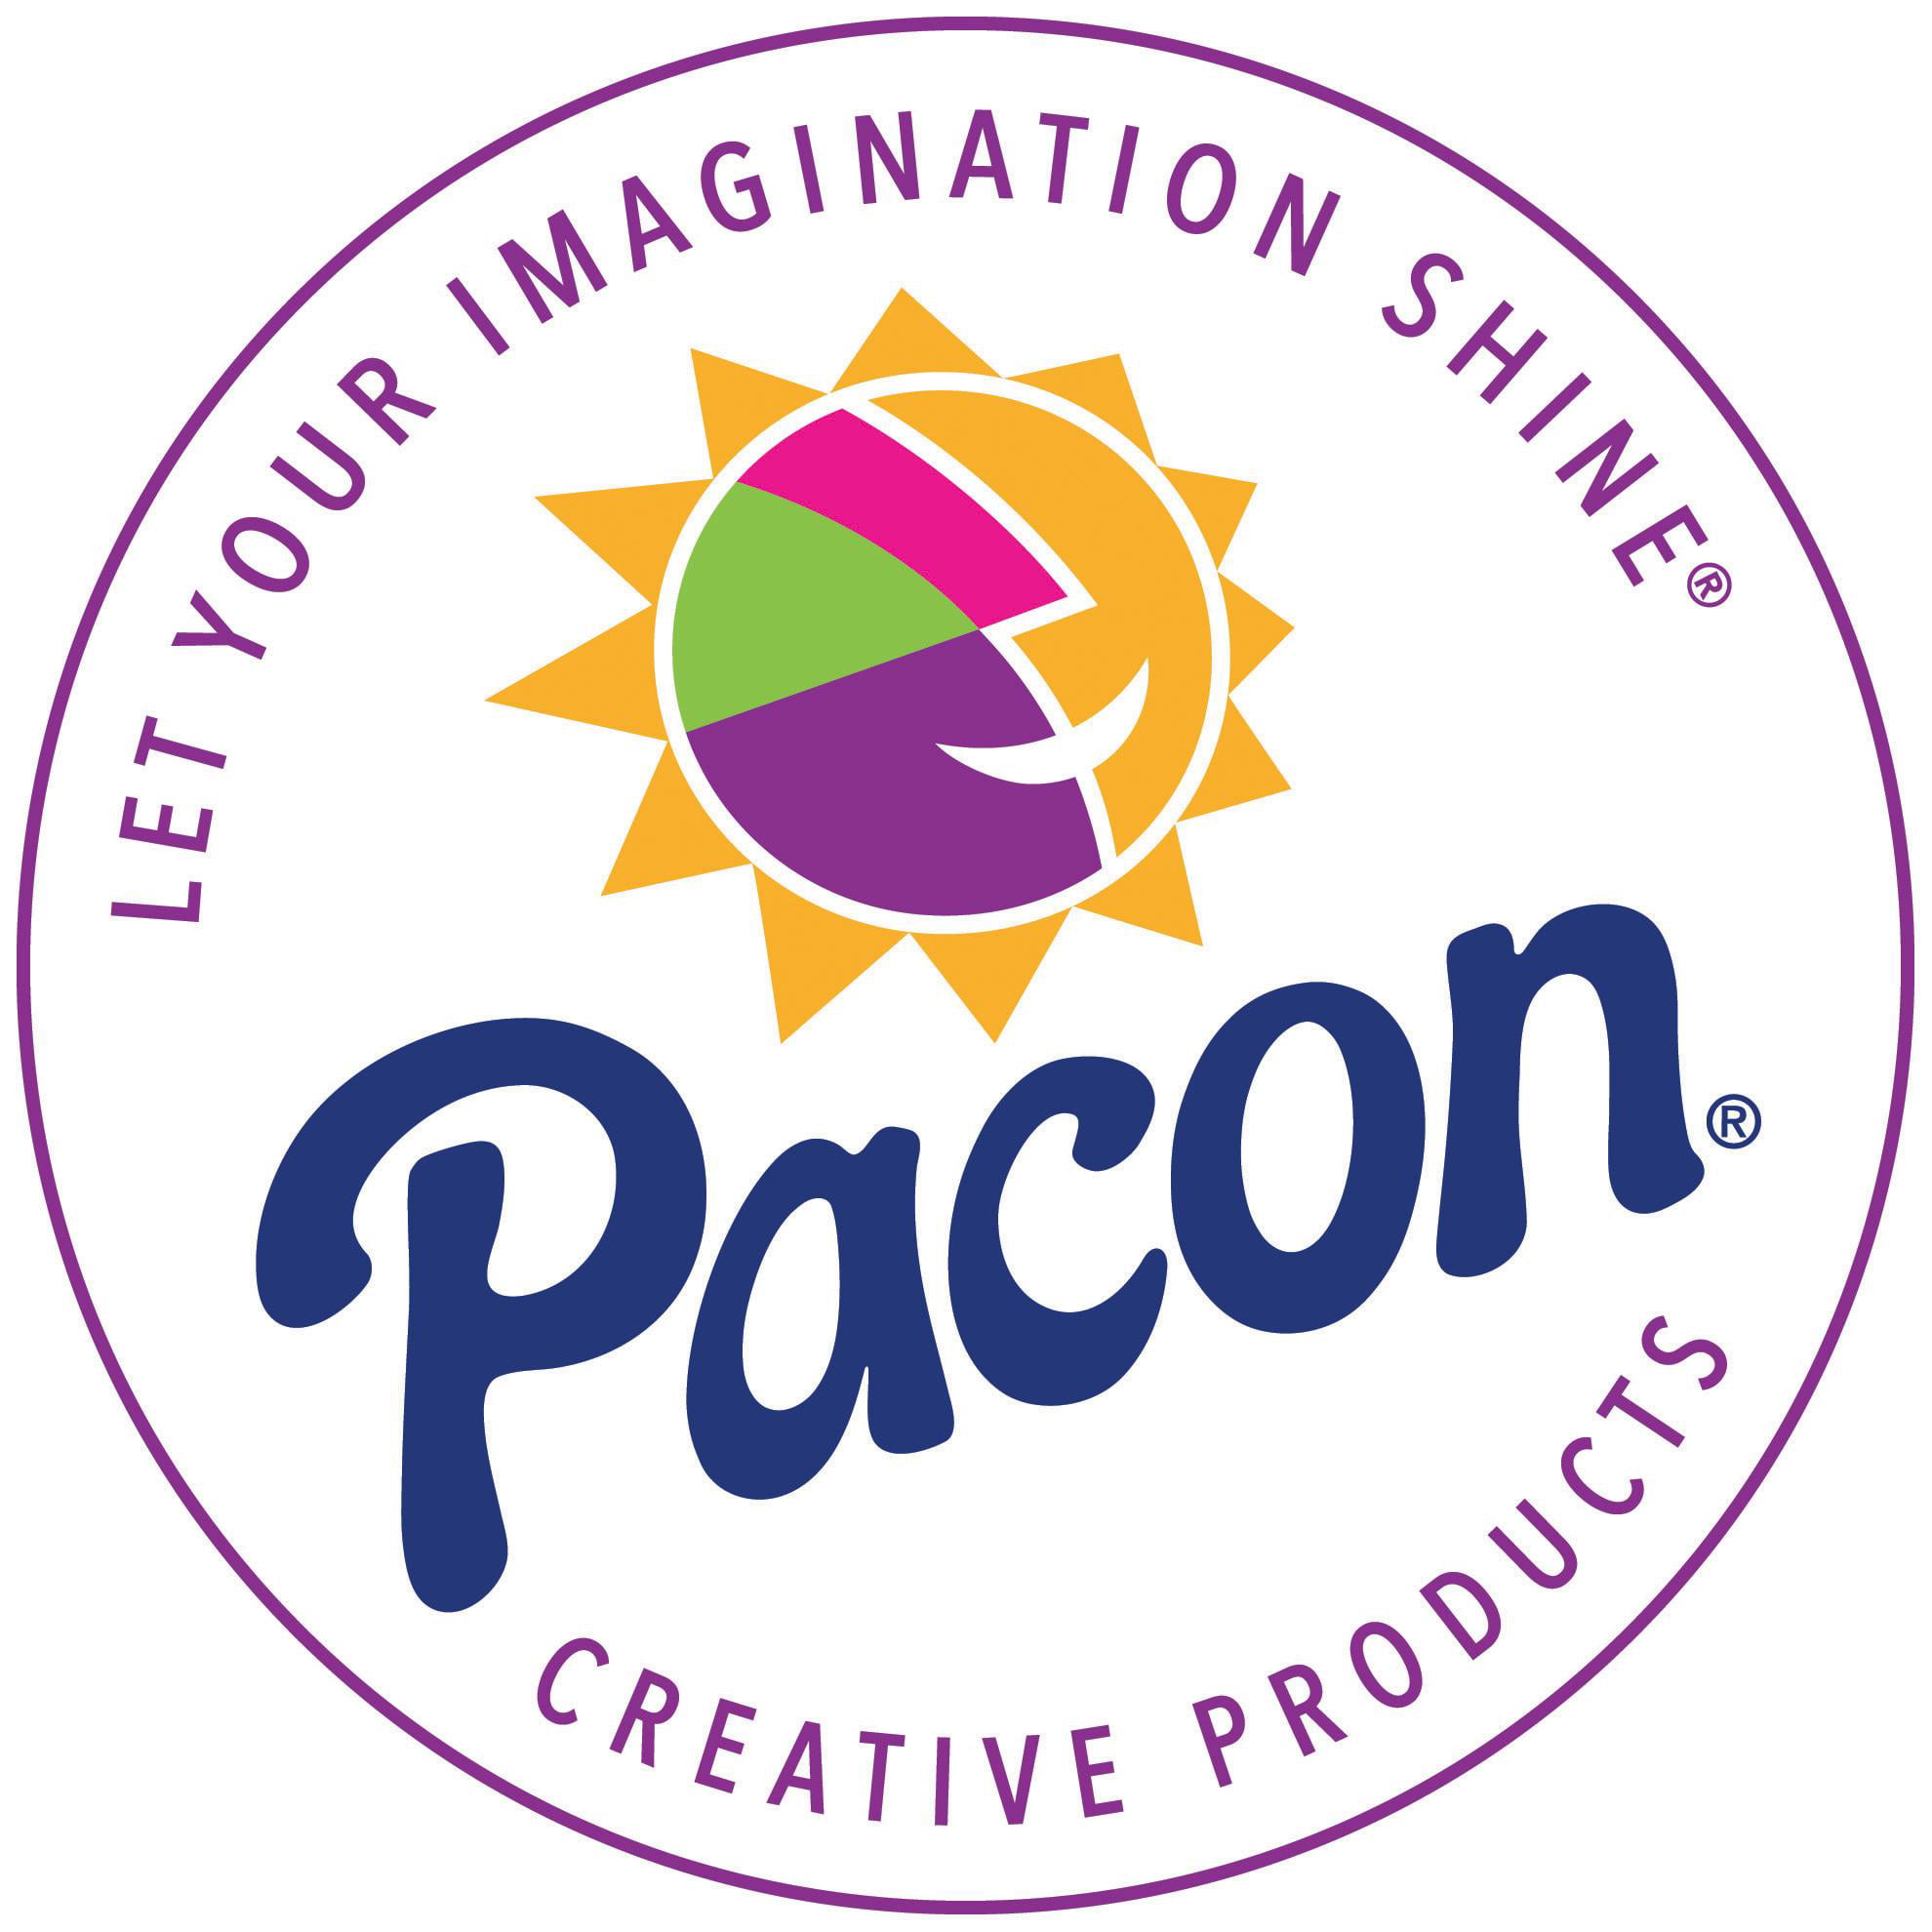 Bulletin Board Décor - Pacon Creative Products